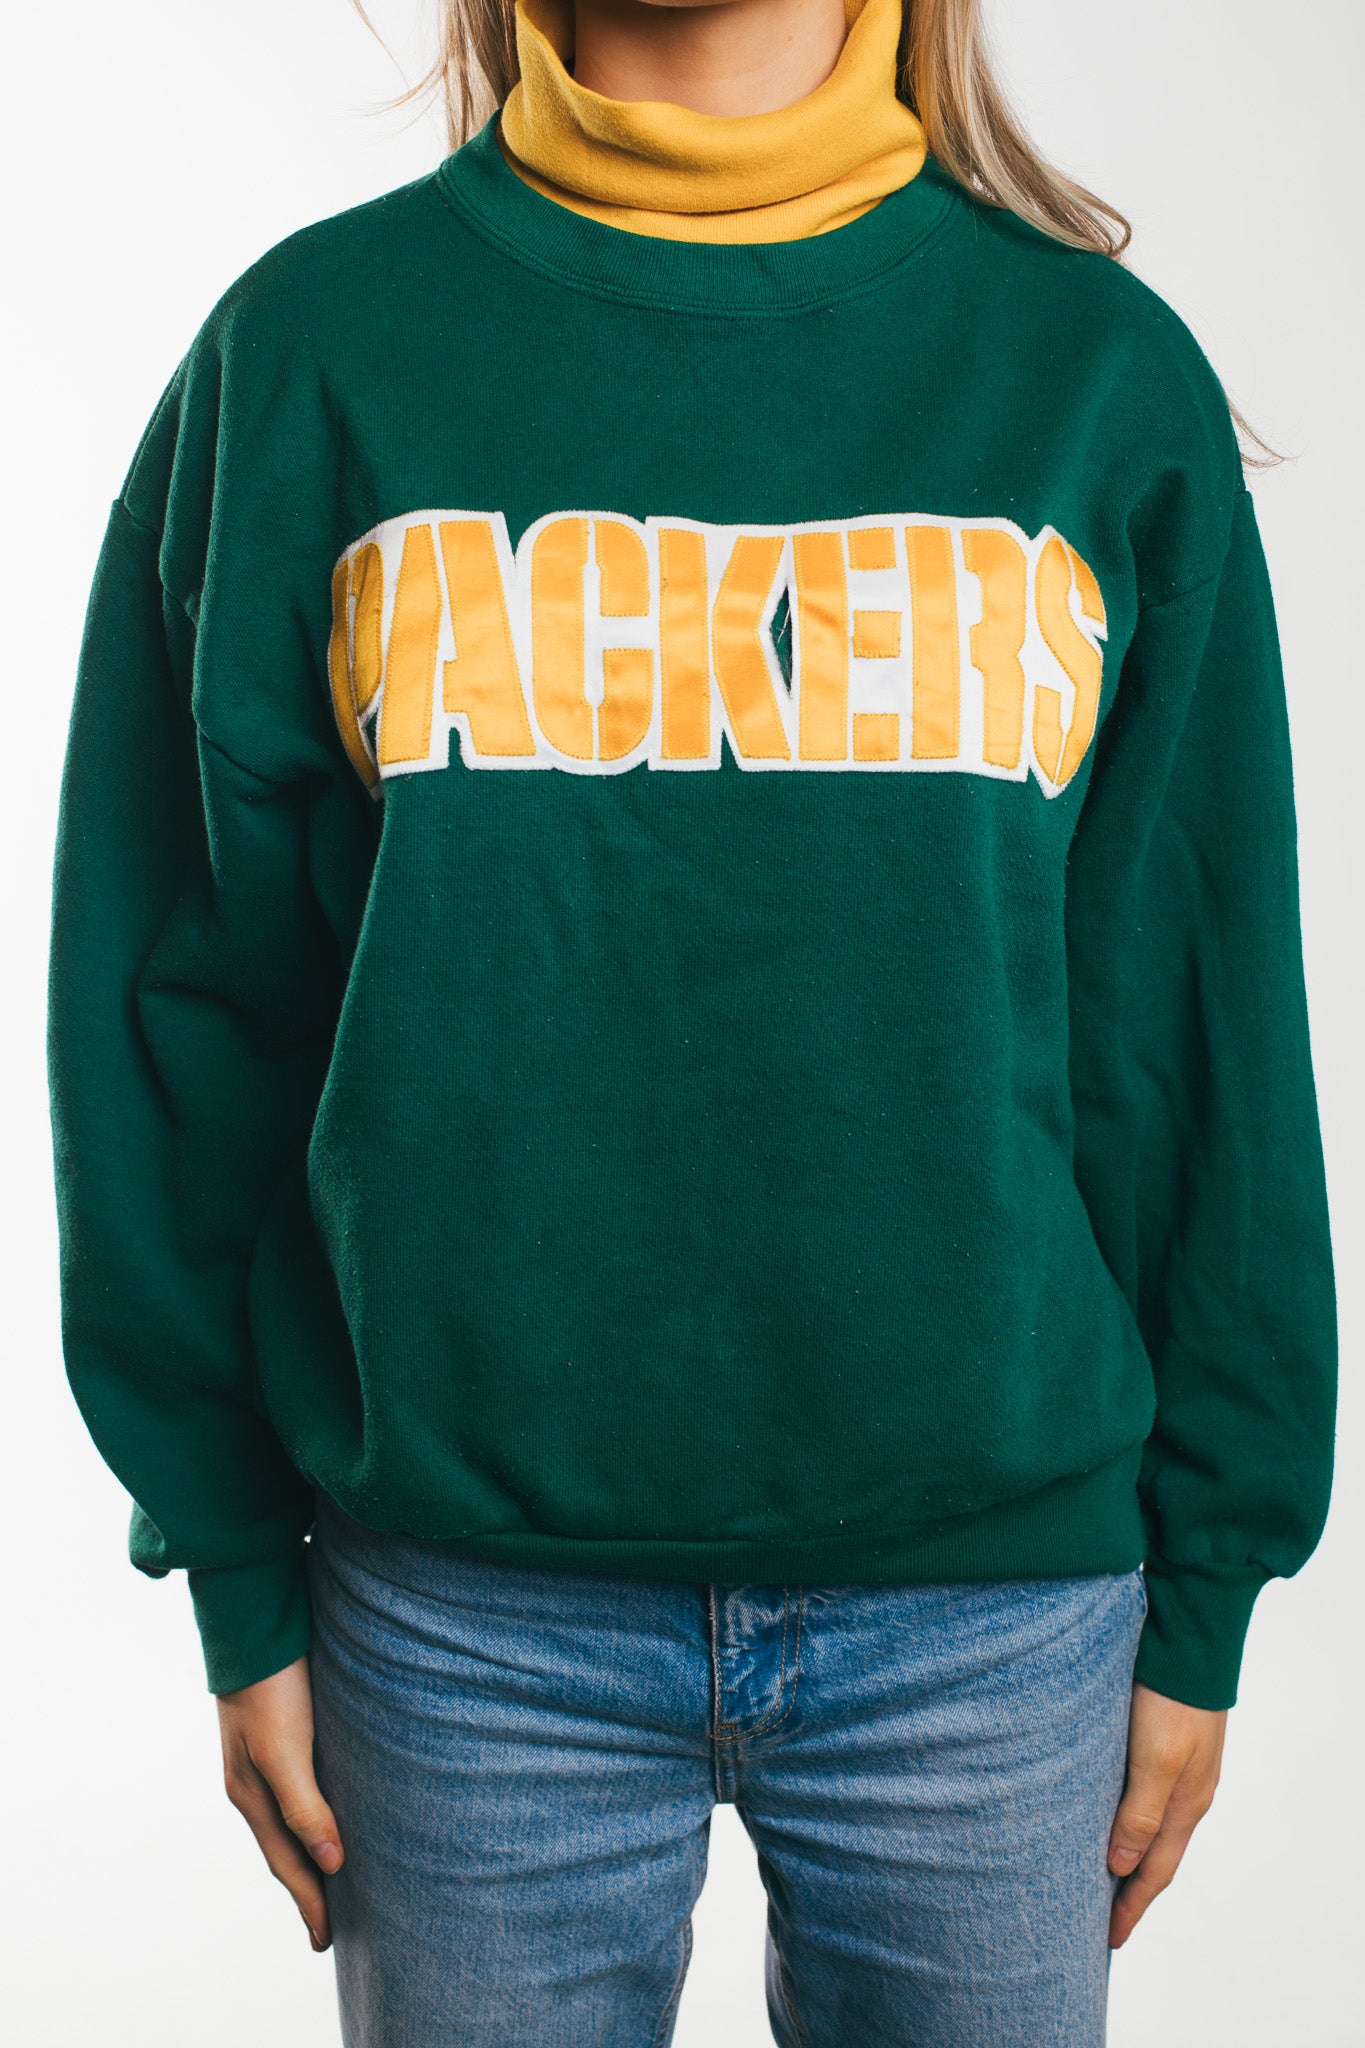 Packers - Sweatshirt (M)